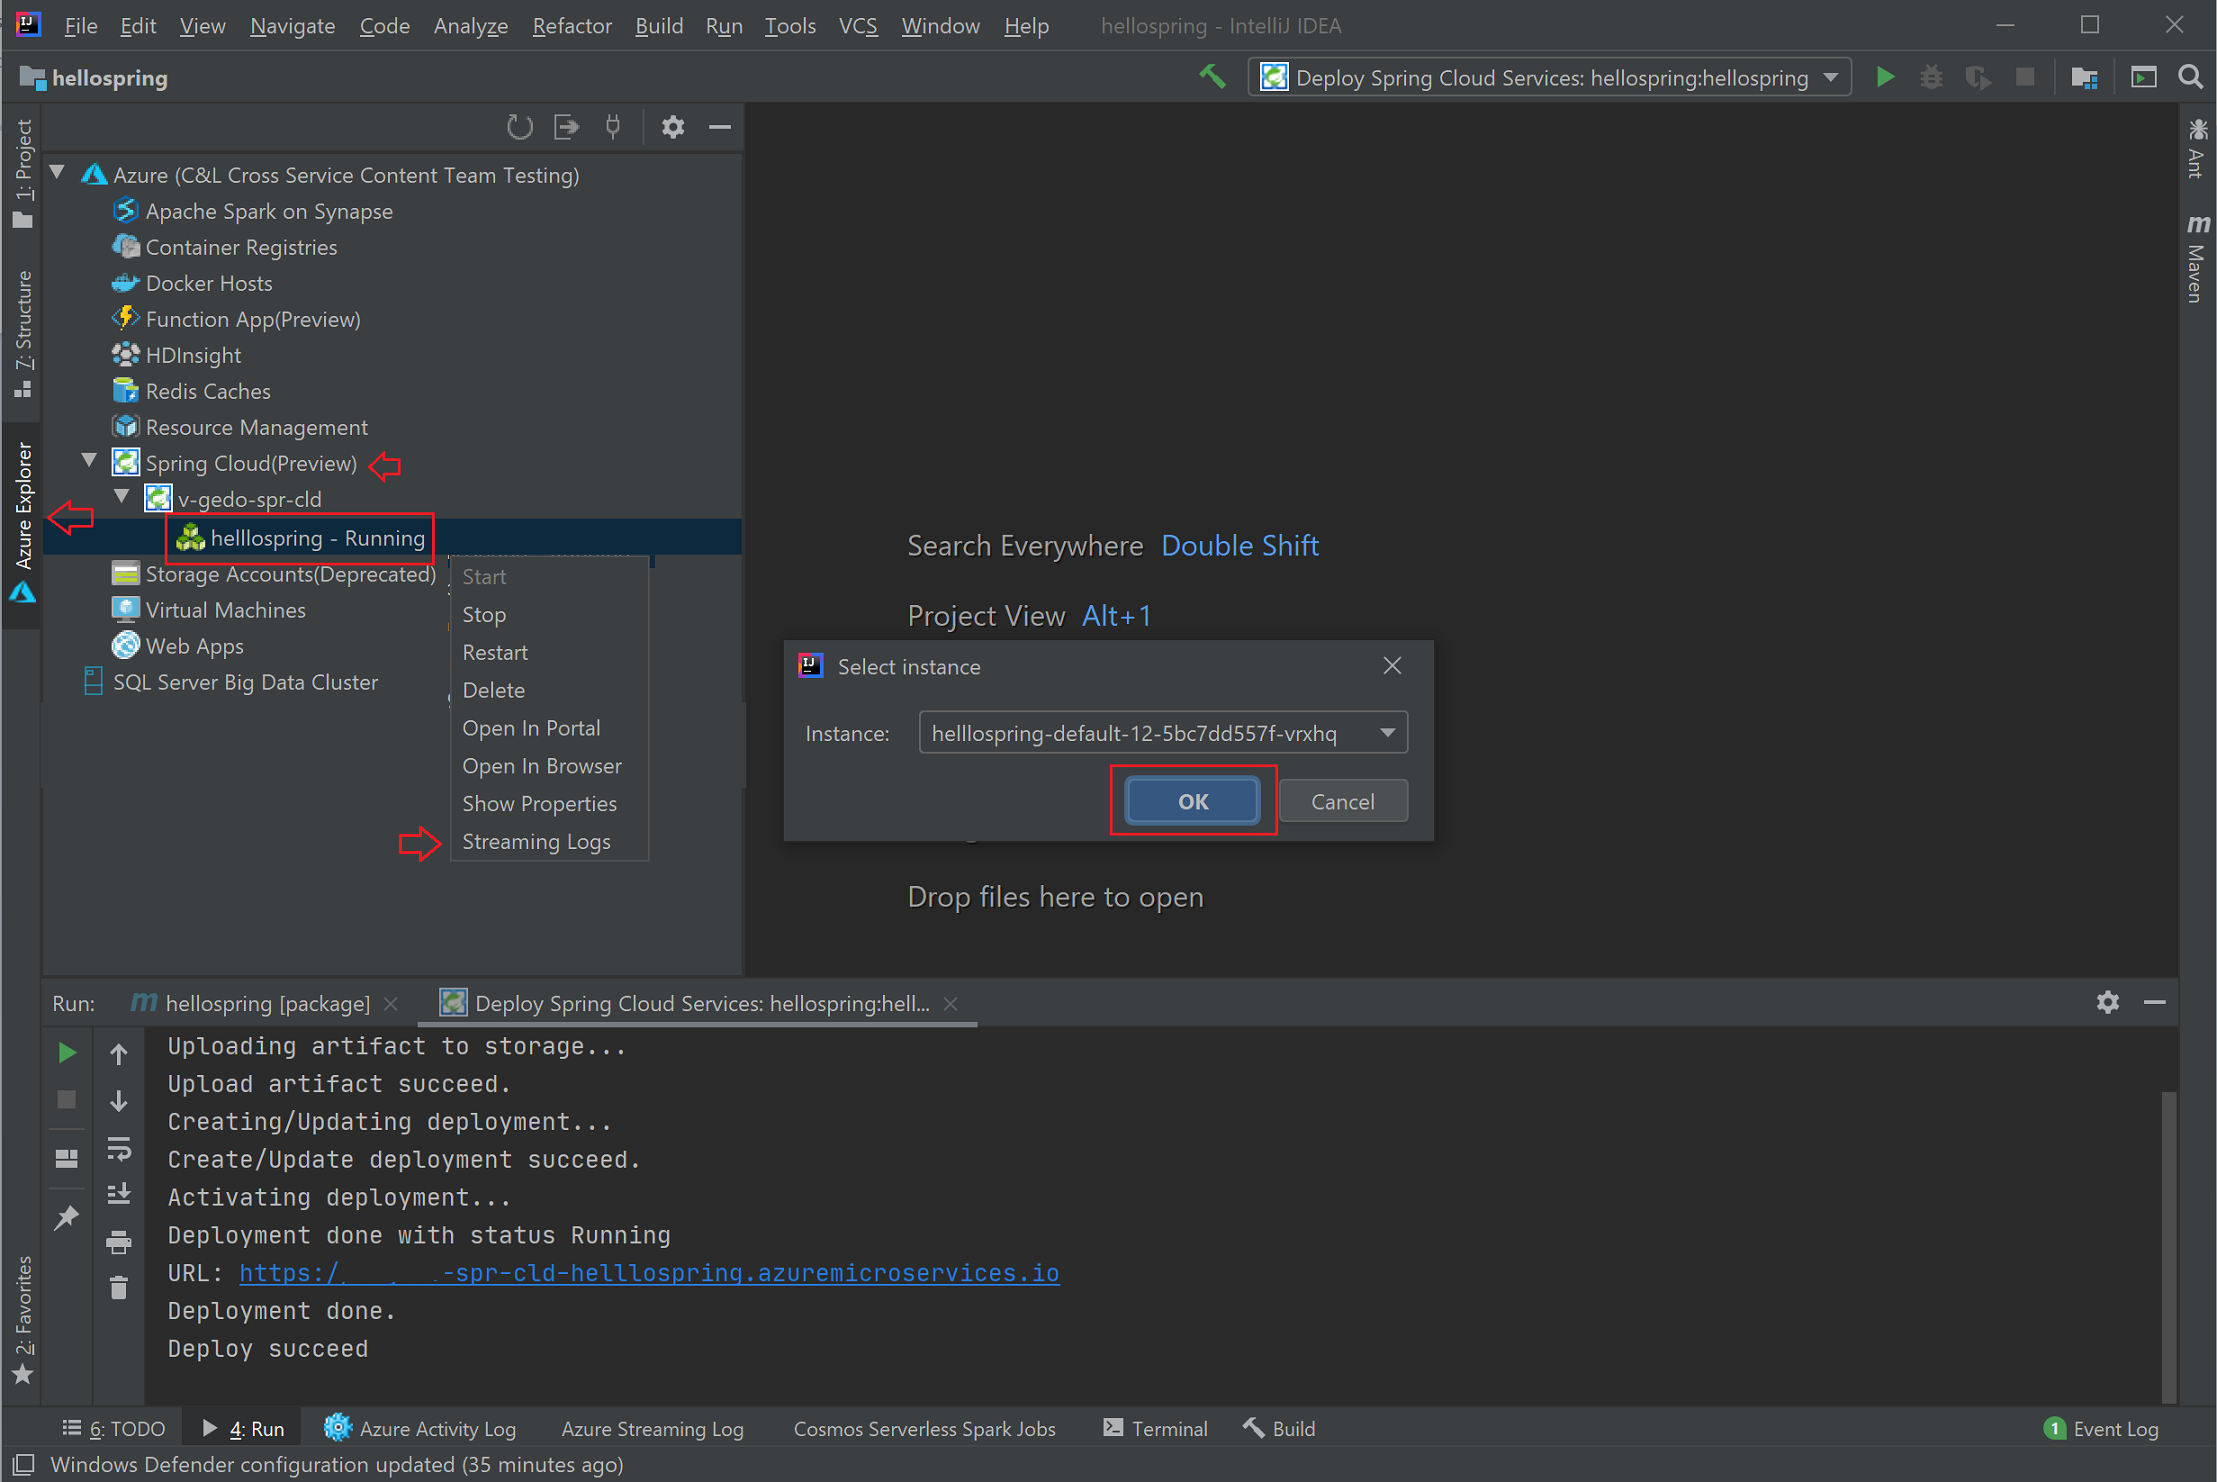 Screenshot of IntelliJ IDEA showing Select instance dialog box.